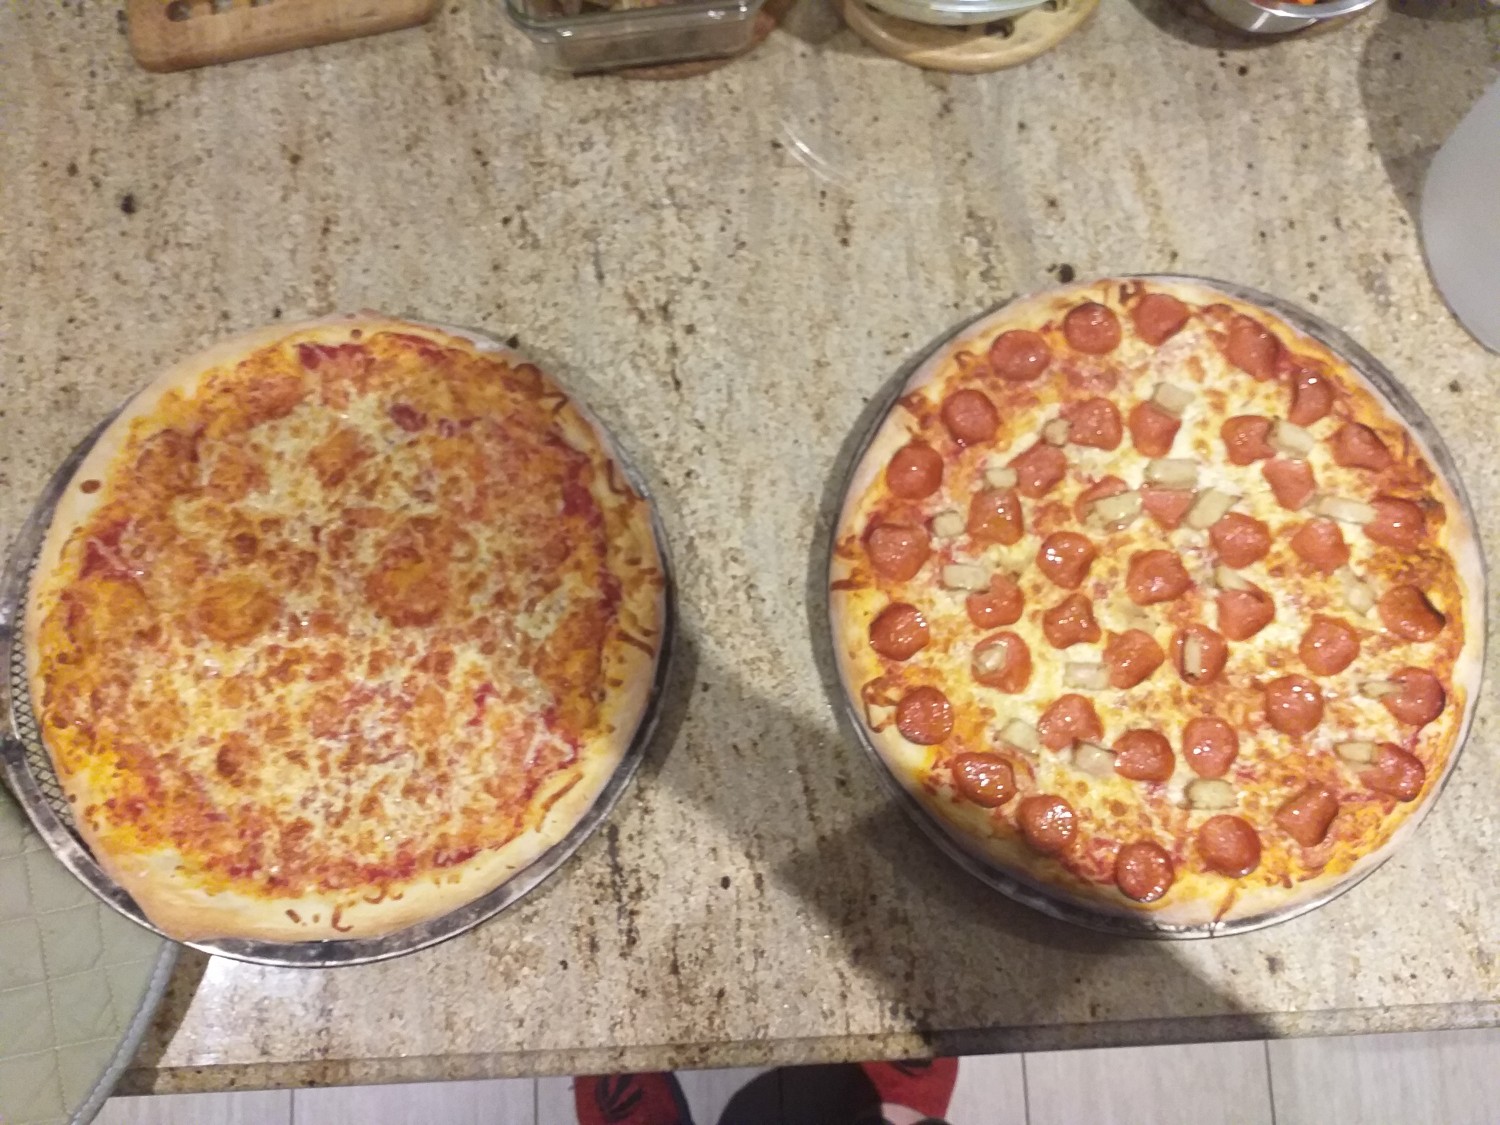 Final Shot of both pizza